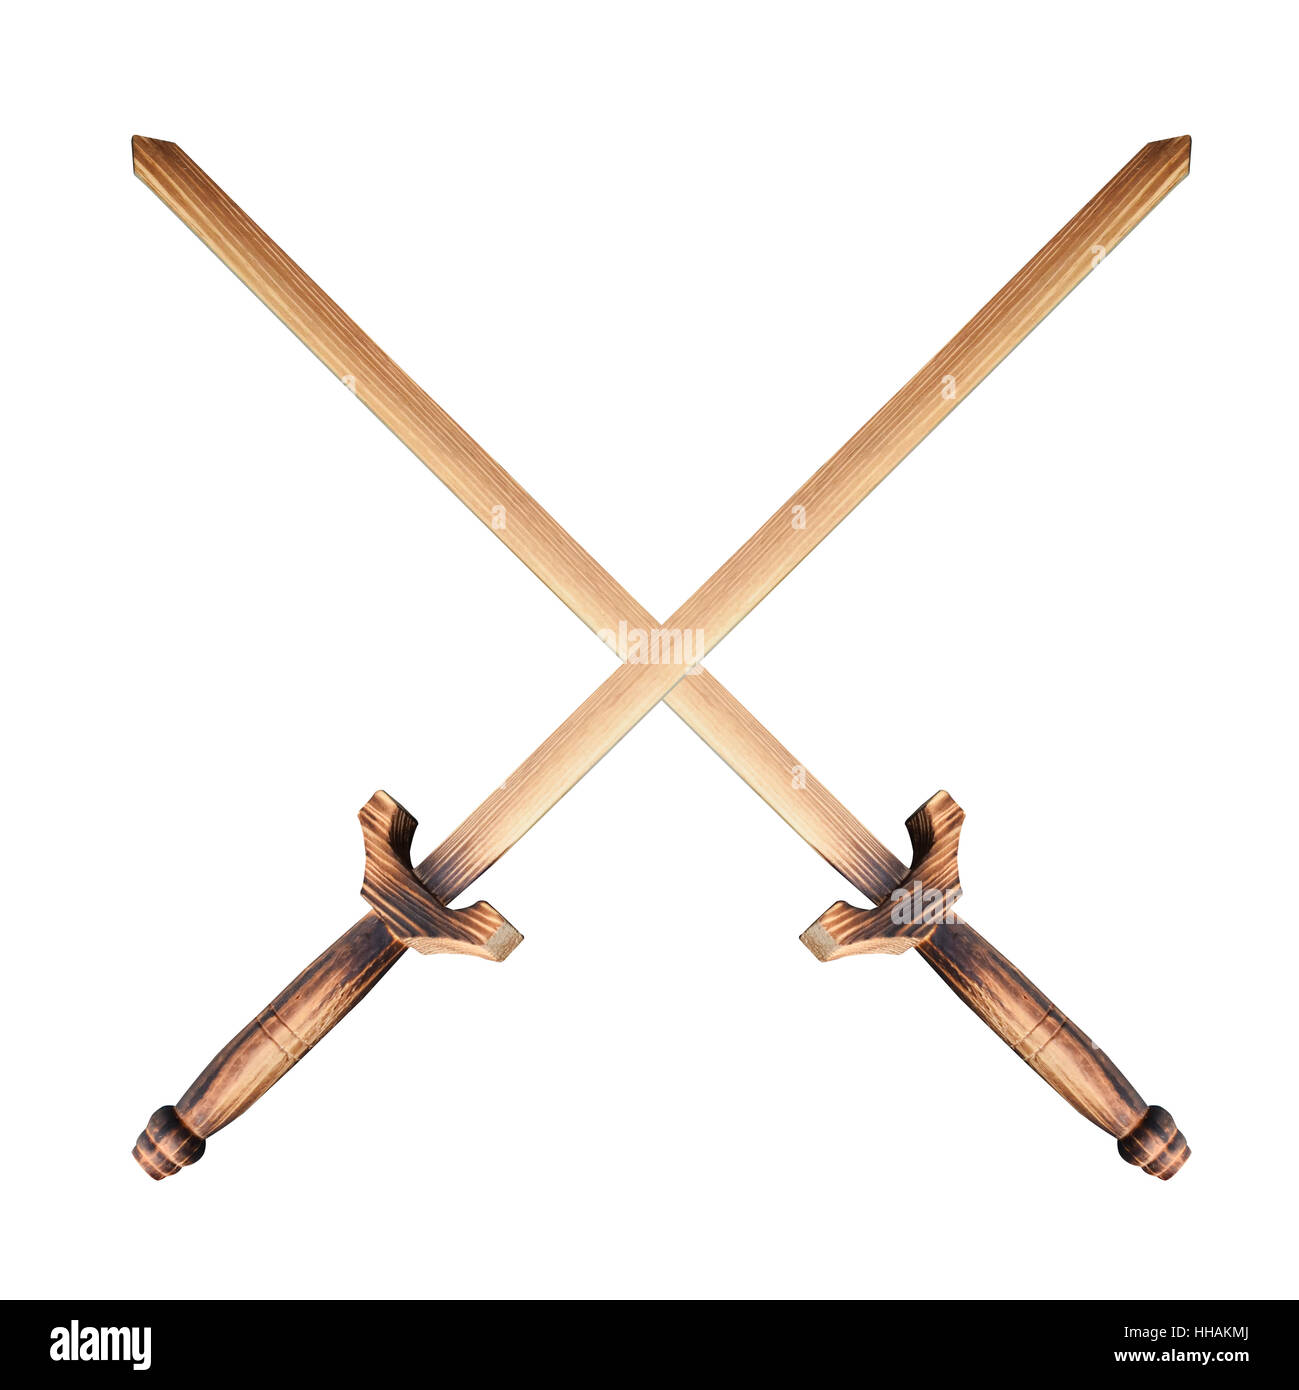 wood, sward, isolated, wood, toy, sword, arm, weapon, rifle, barrel, backdrop, Stock Photo